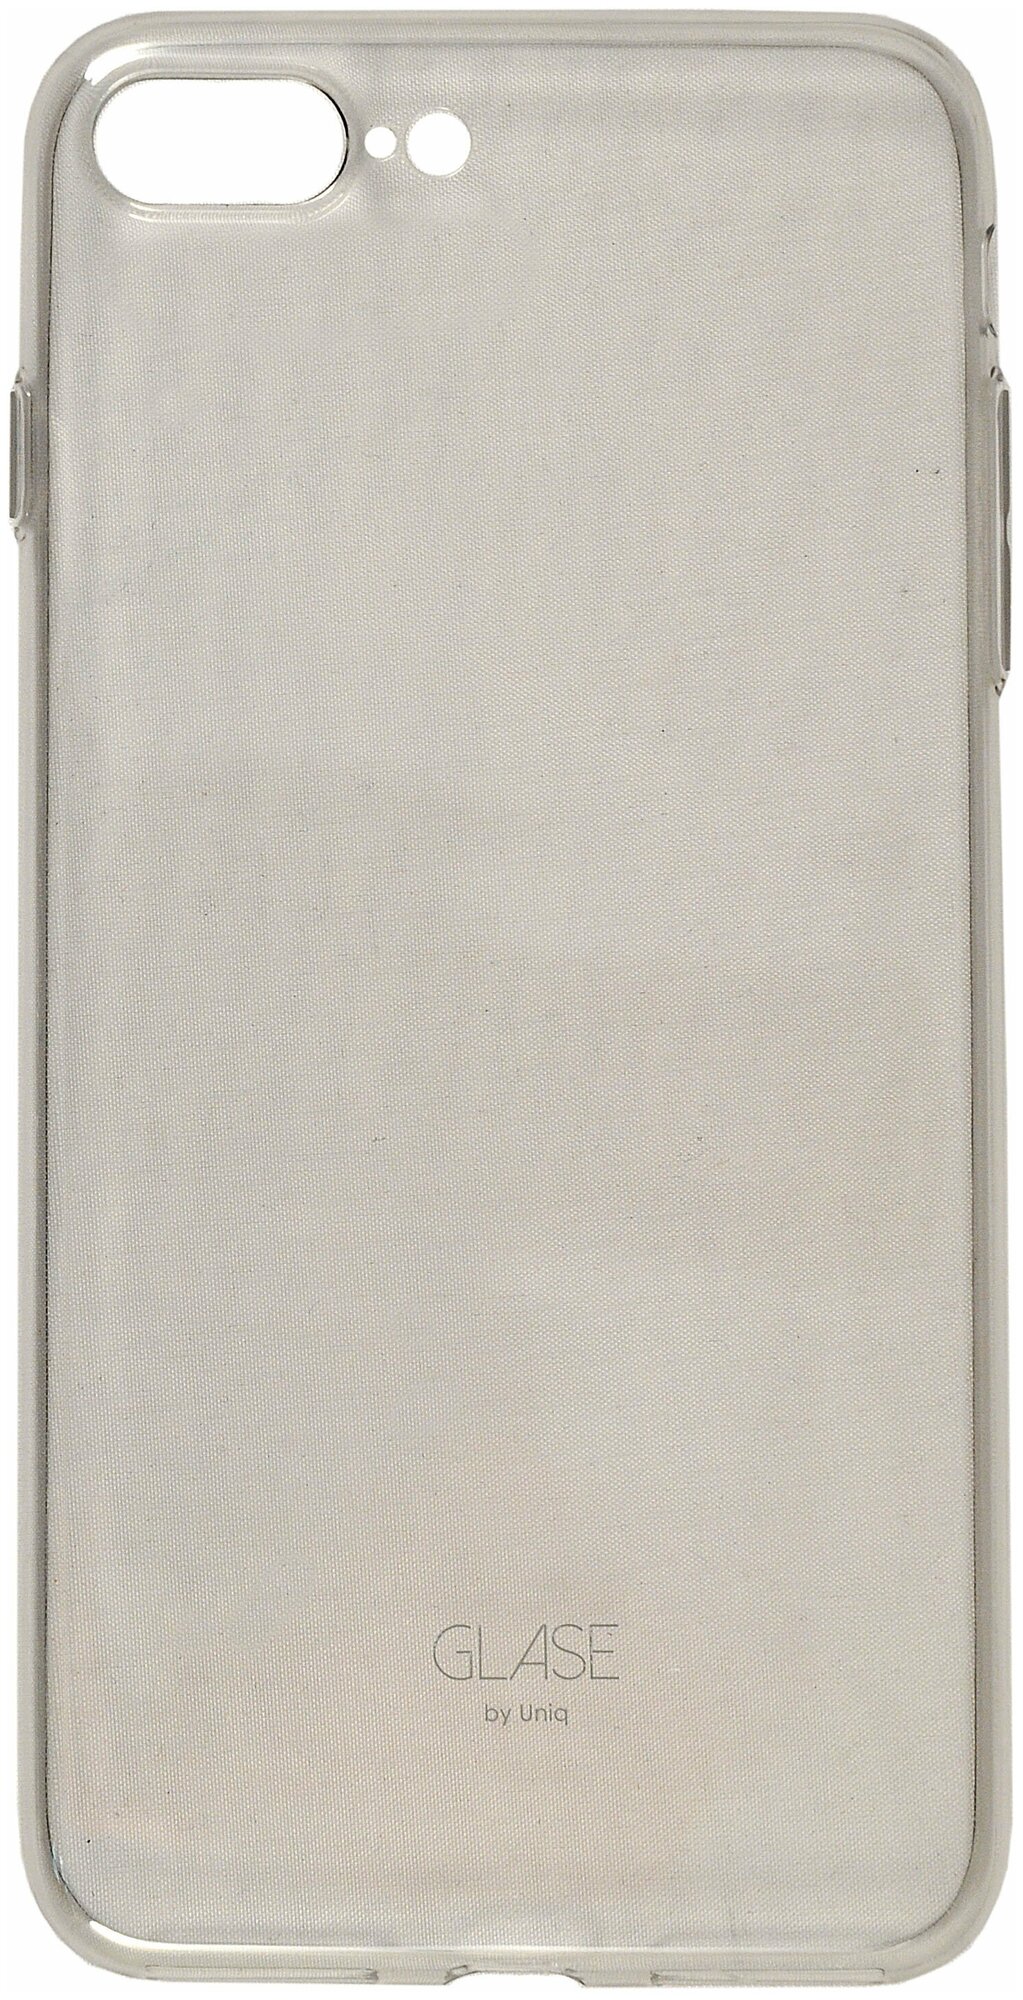 Чехол-крышка Uniq Glace для iPhone 7 Plus/ 8 Plus, силикон, серый - фото №1